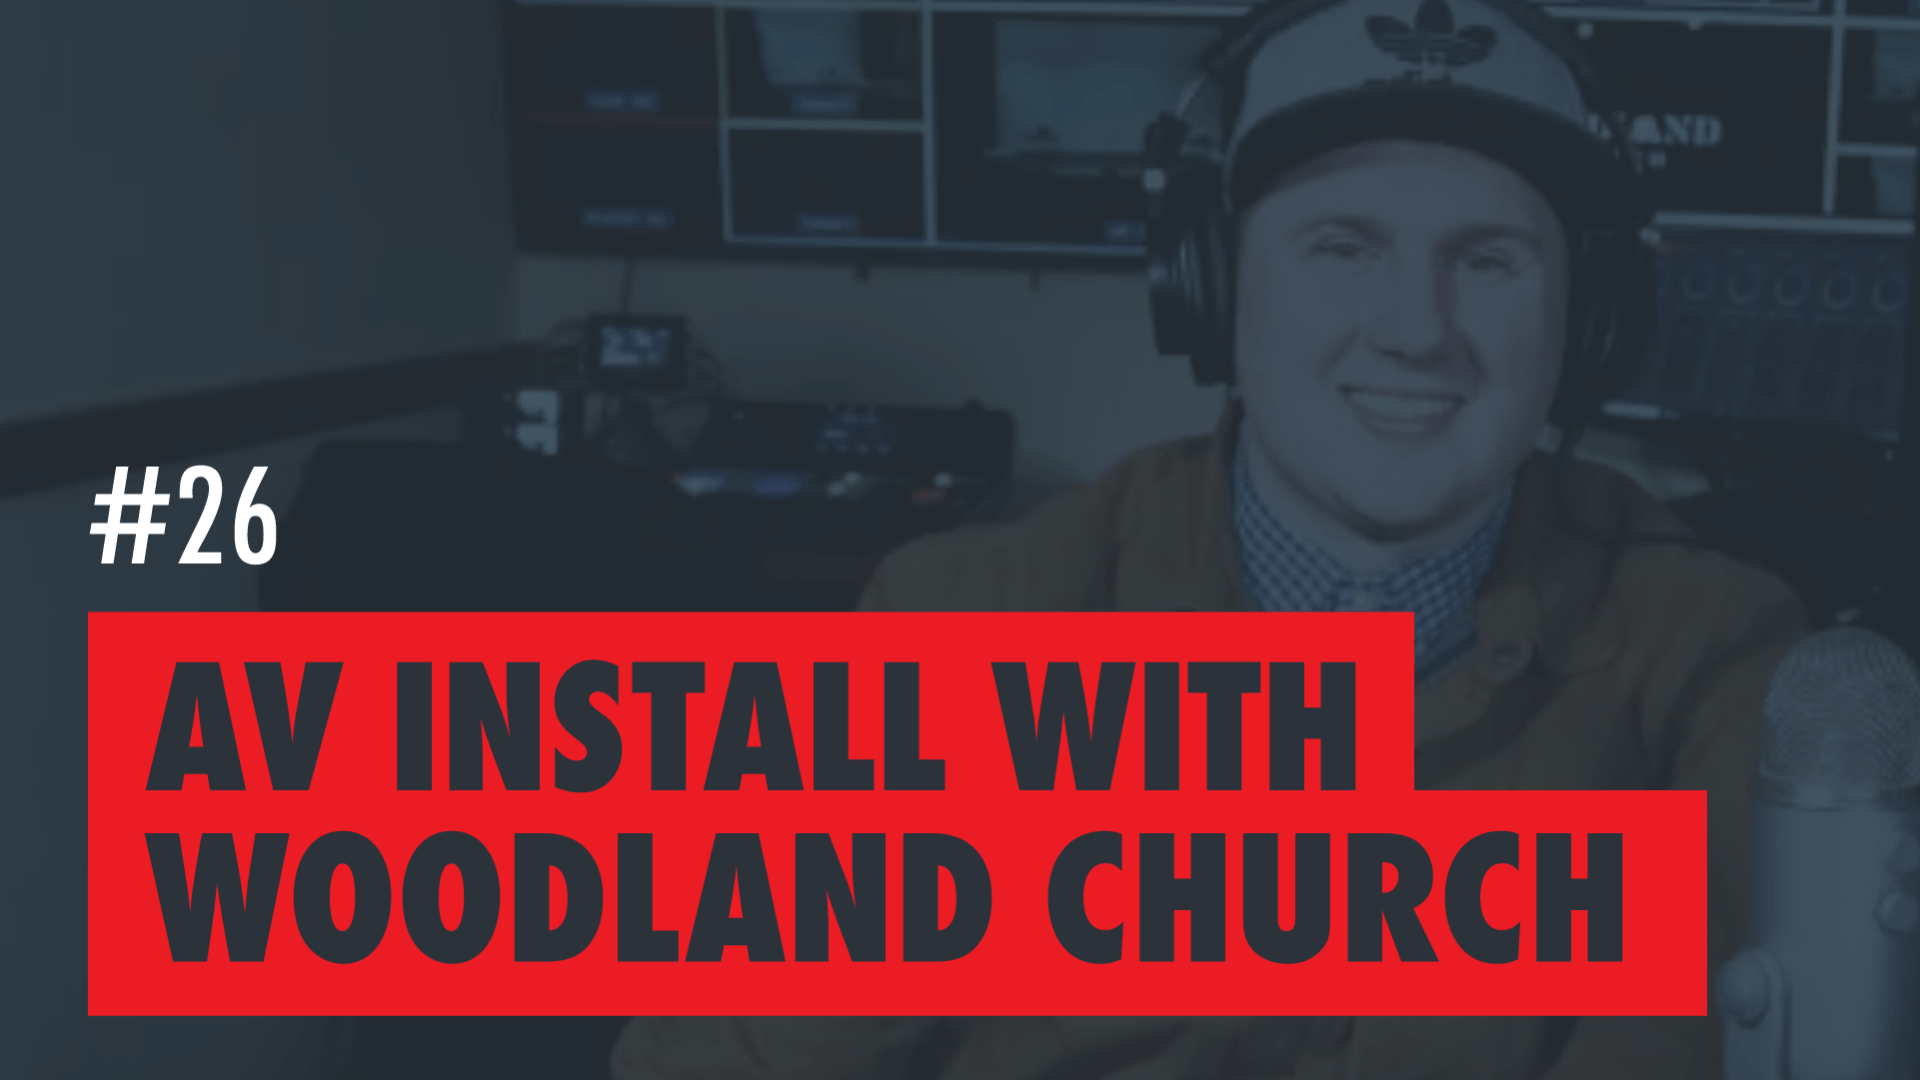 AV Install with Woodland Church